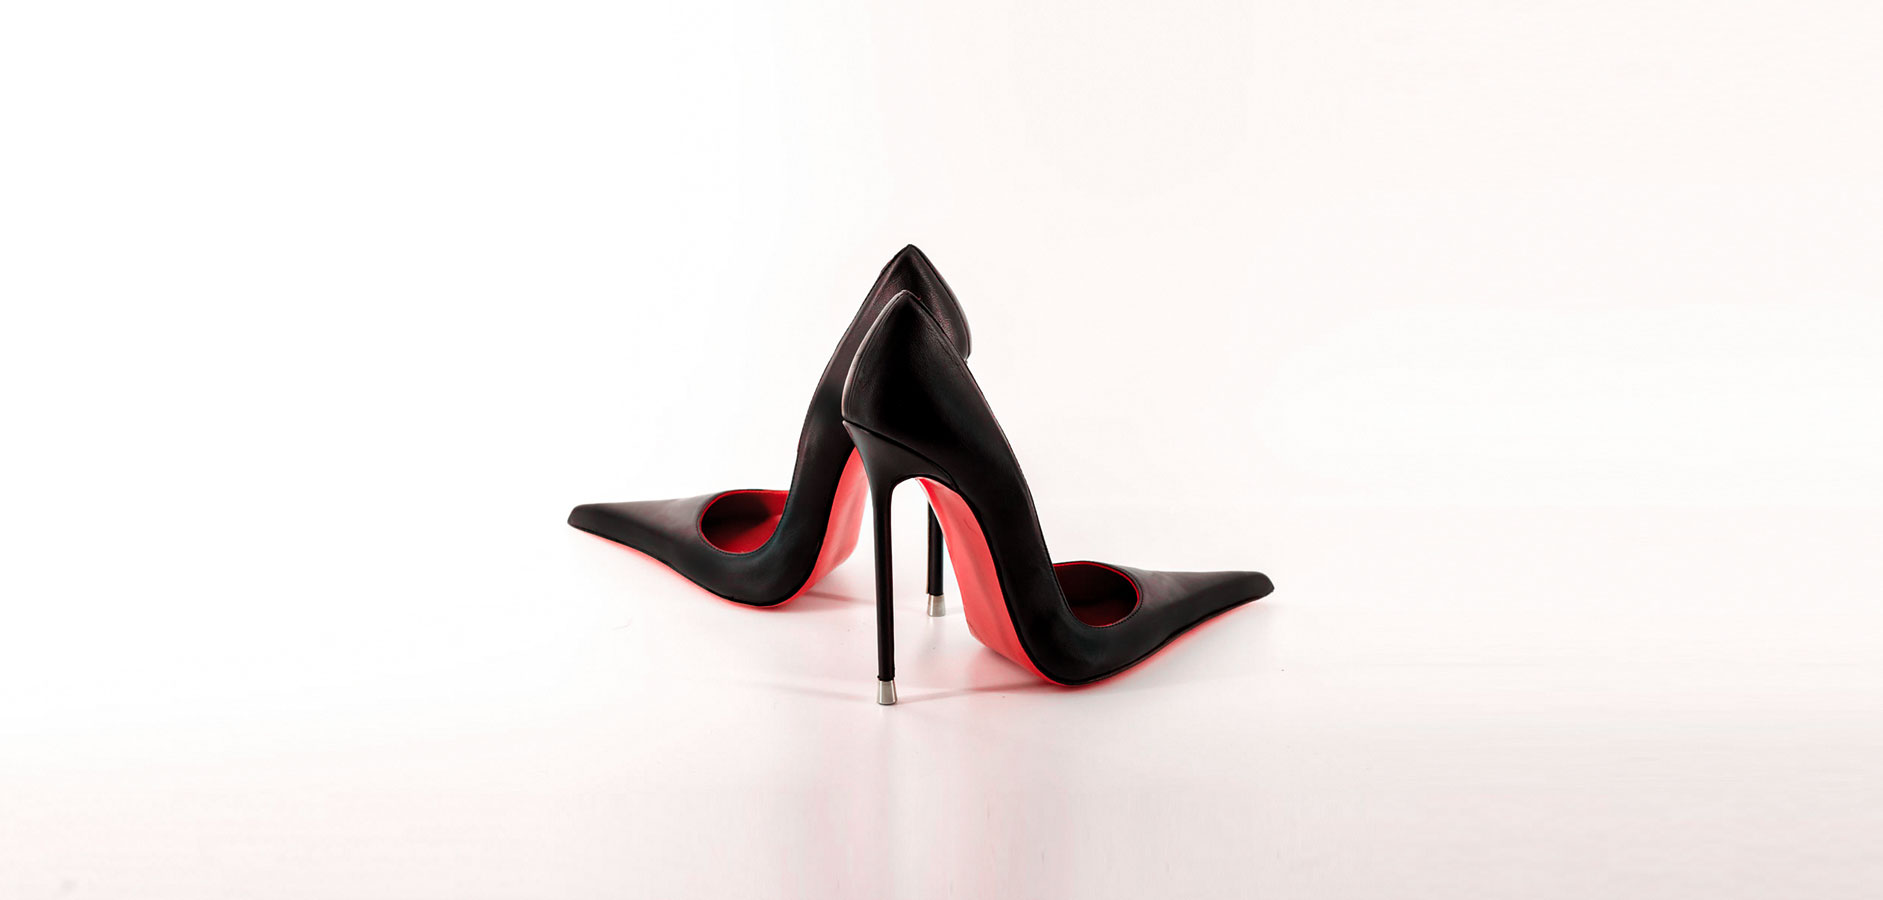 shoes louis vuitton high heels black red red high heels luxury